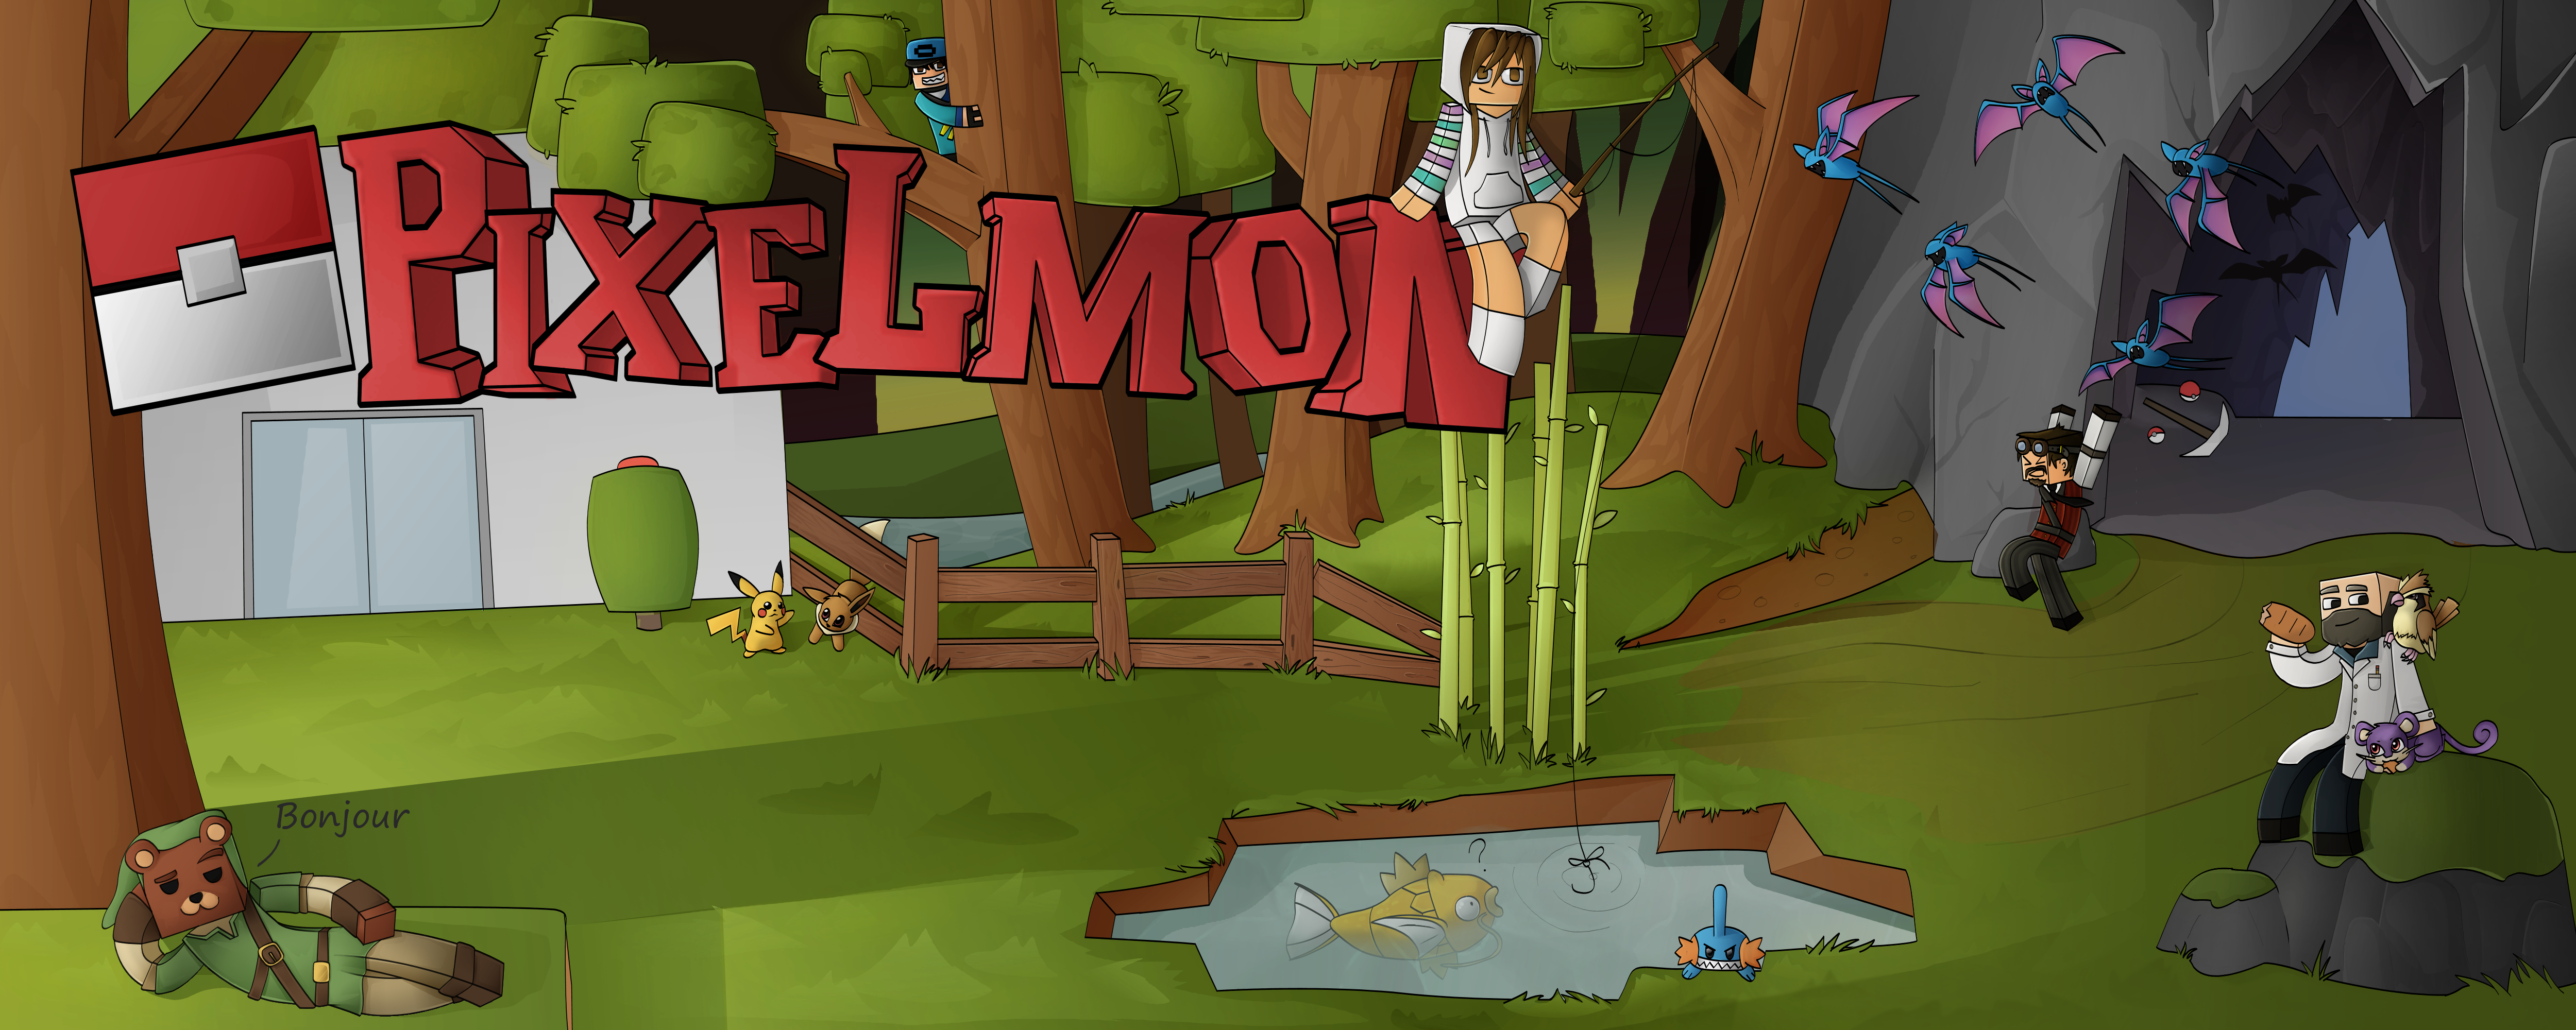 Pixelmon Banner By Dragonspainter